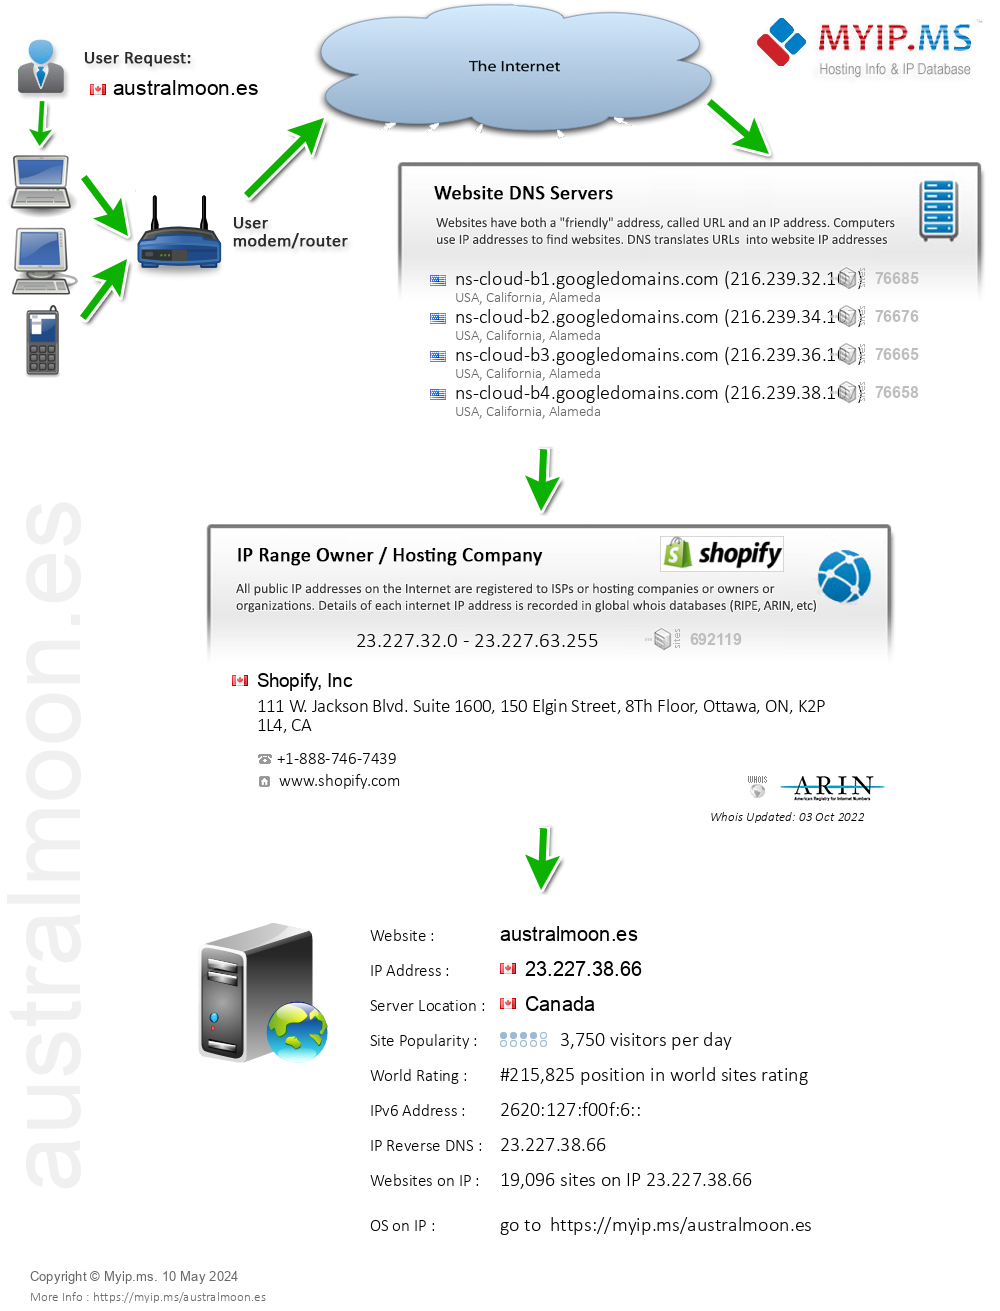 Australmoon.es - Website Hosting Visual IP Diagram